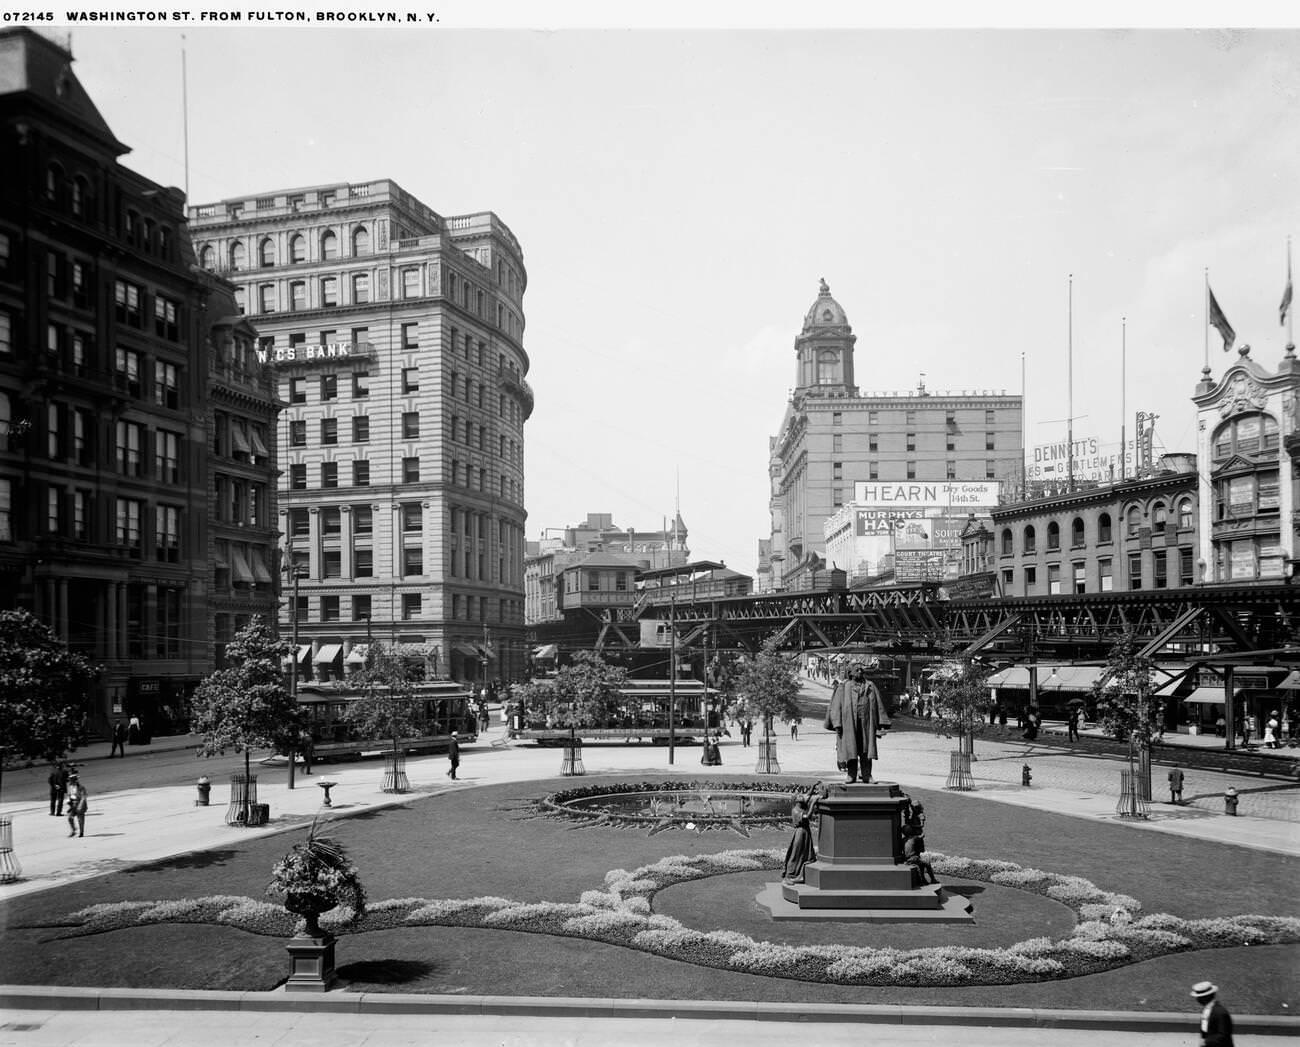 View Of Washington St. From Fulton, Brooklyn, 1915